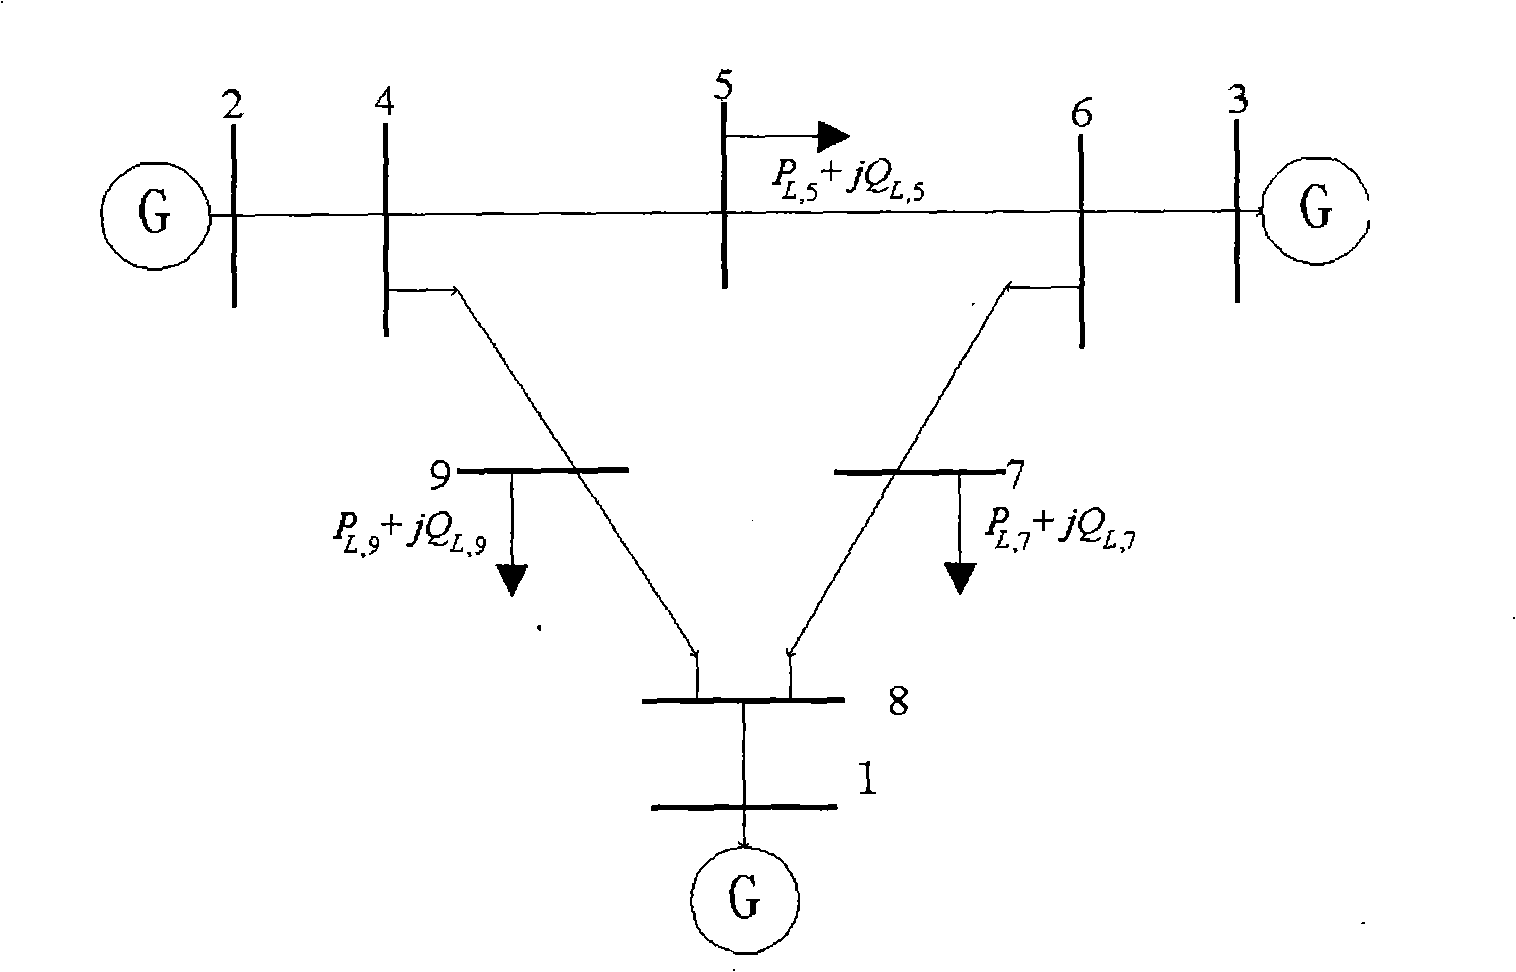 Method for distinguishing stability of muilt-timelag electric power system